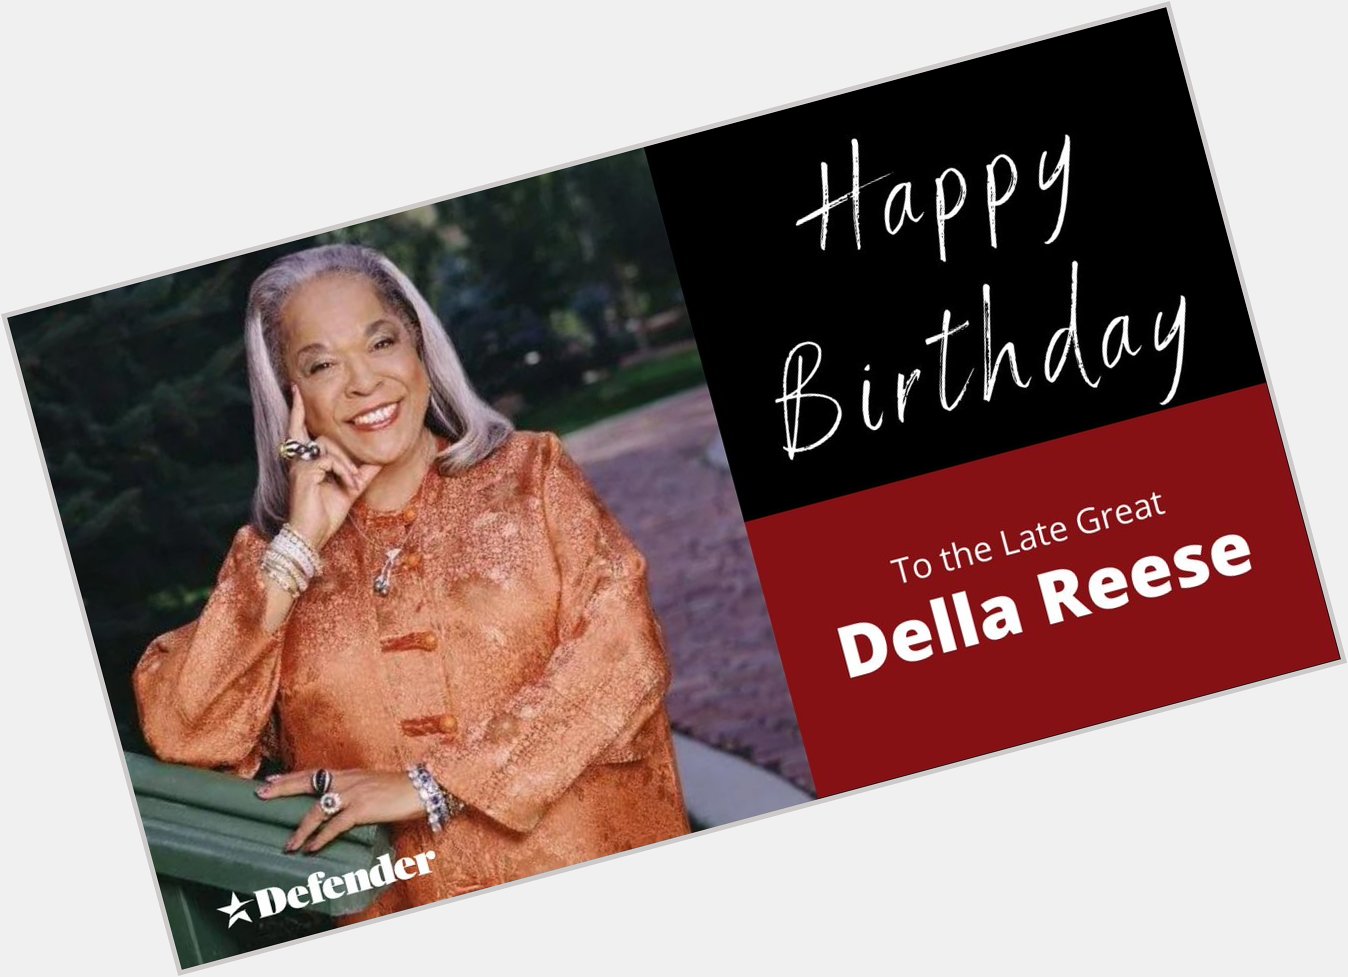 We were all truly Happy Heavenly Birthday, Della Reese. 